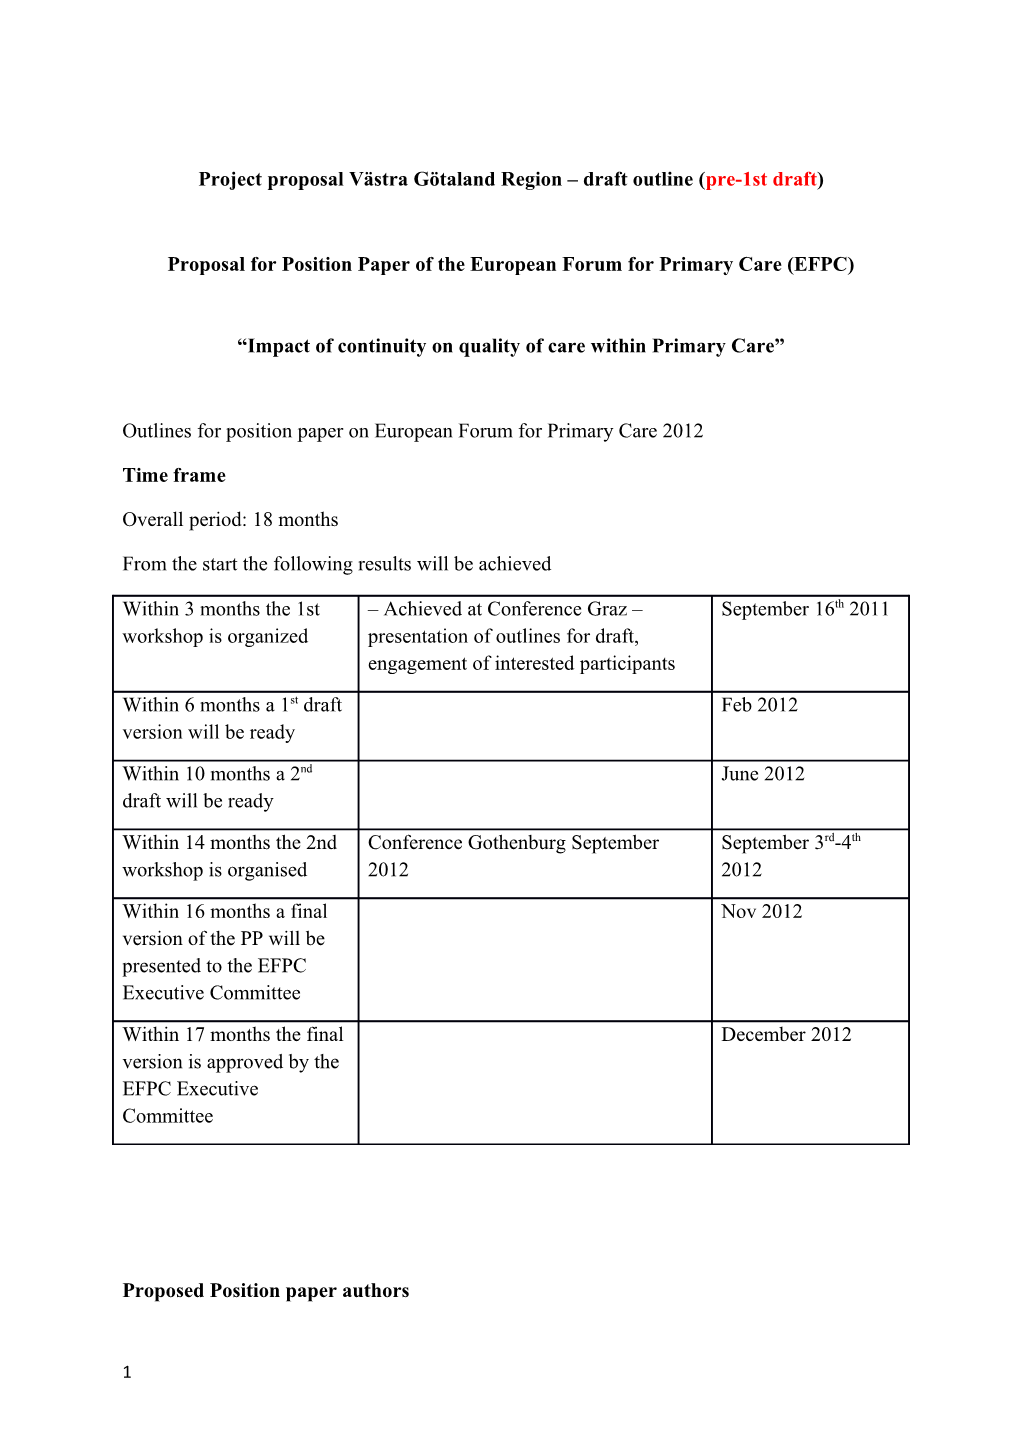 Project Proposalvästragötaland Region Draftoutline (Pre-1St Draft)